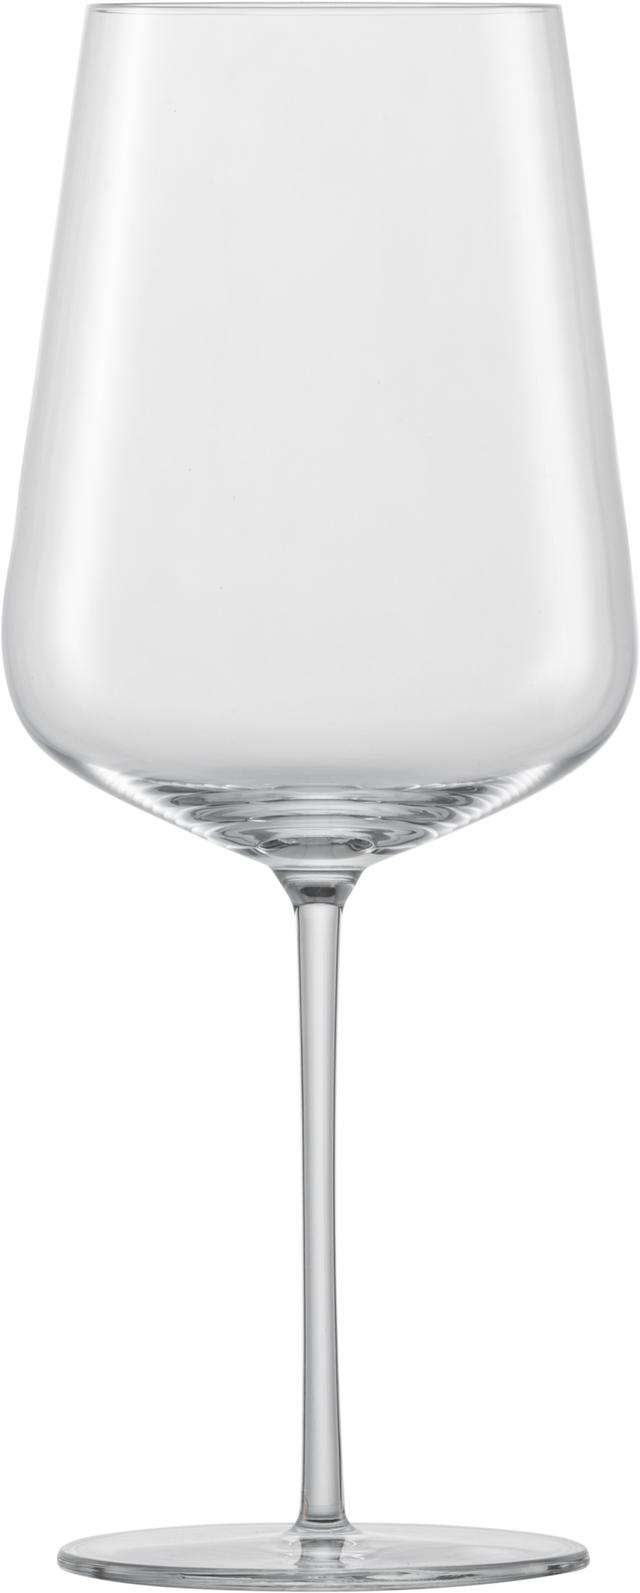 zwiesel glas vervino bordeaux goblet 130 - 0.742 ltr - geschenkverpakking 2 glazen